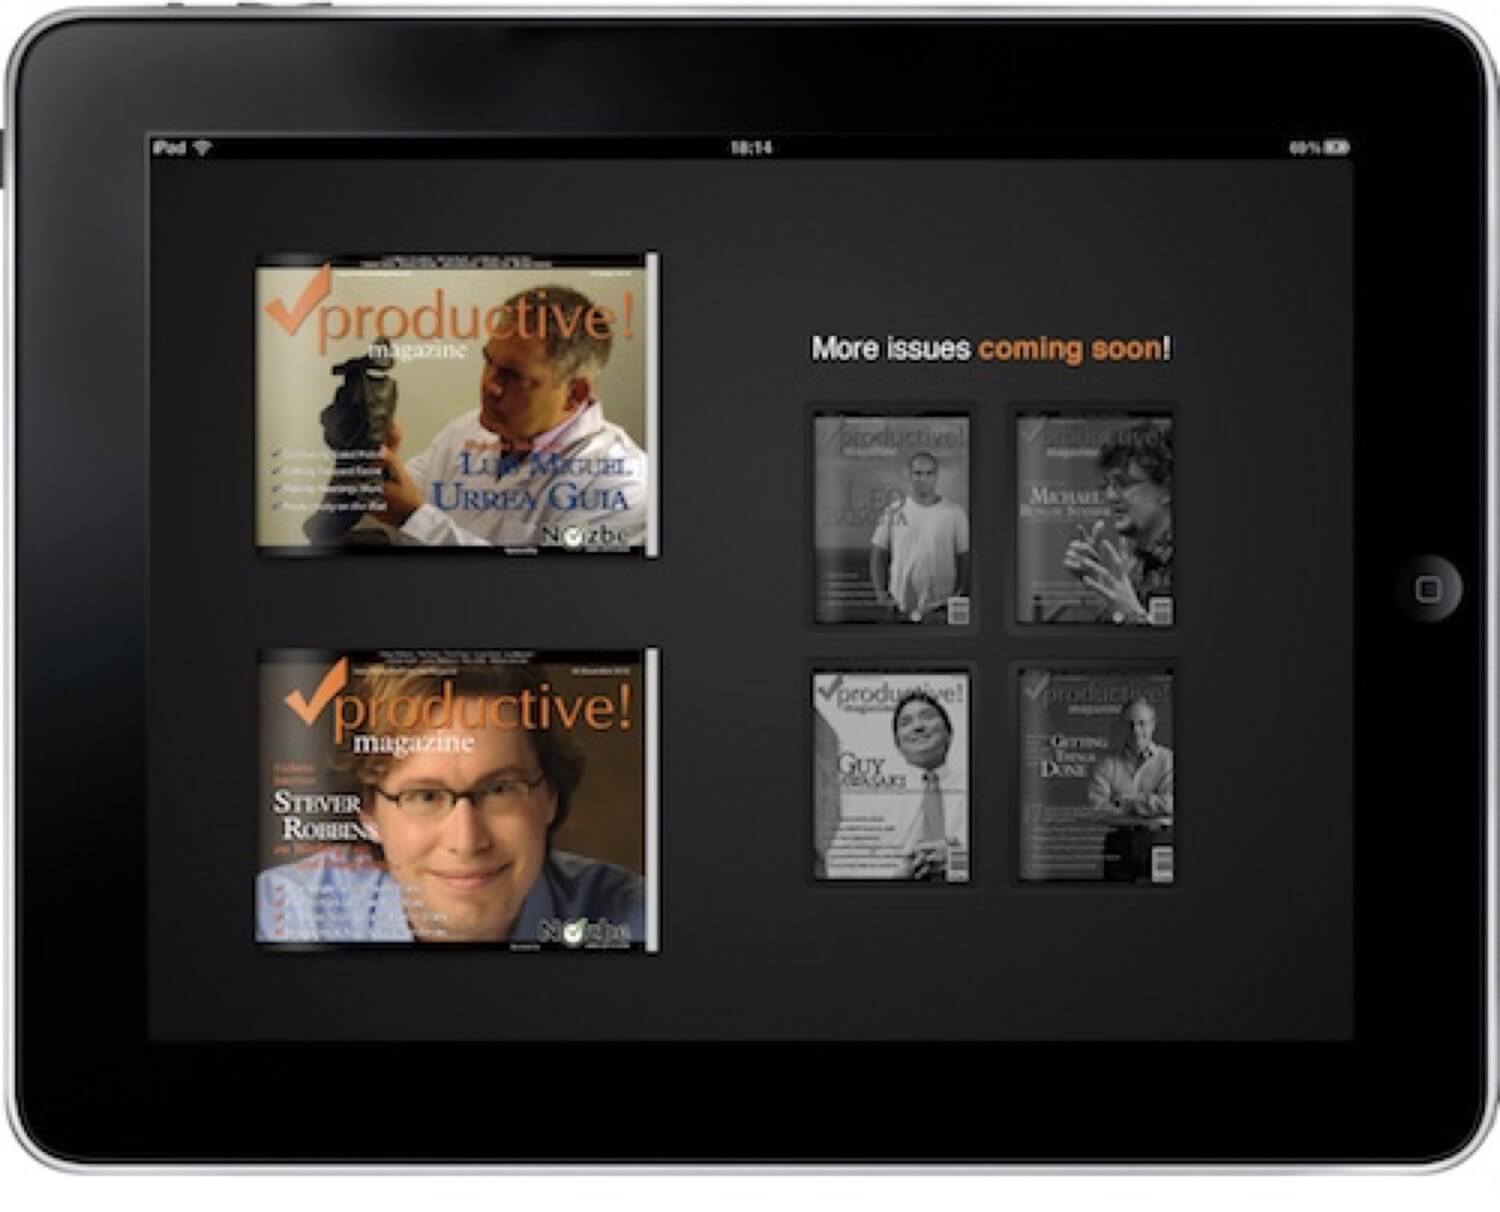 Productive Magazine #6 iPad app with #5 inside :-) 2